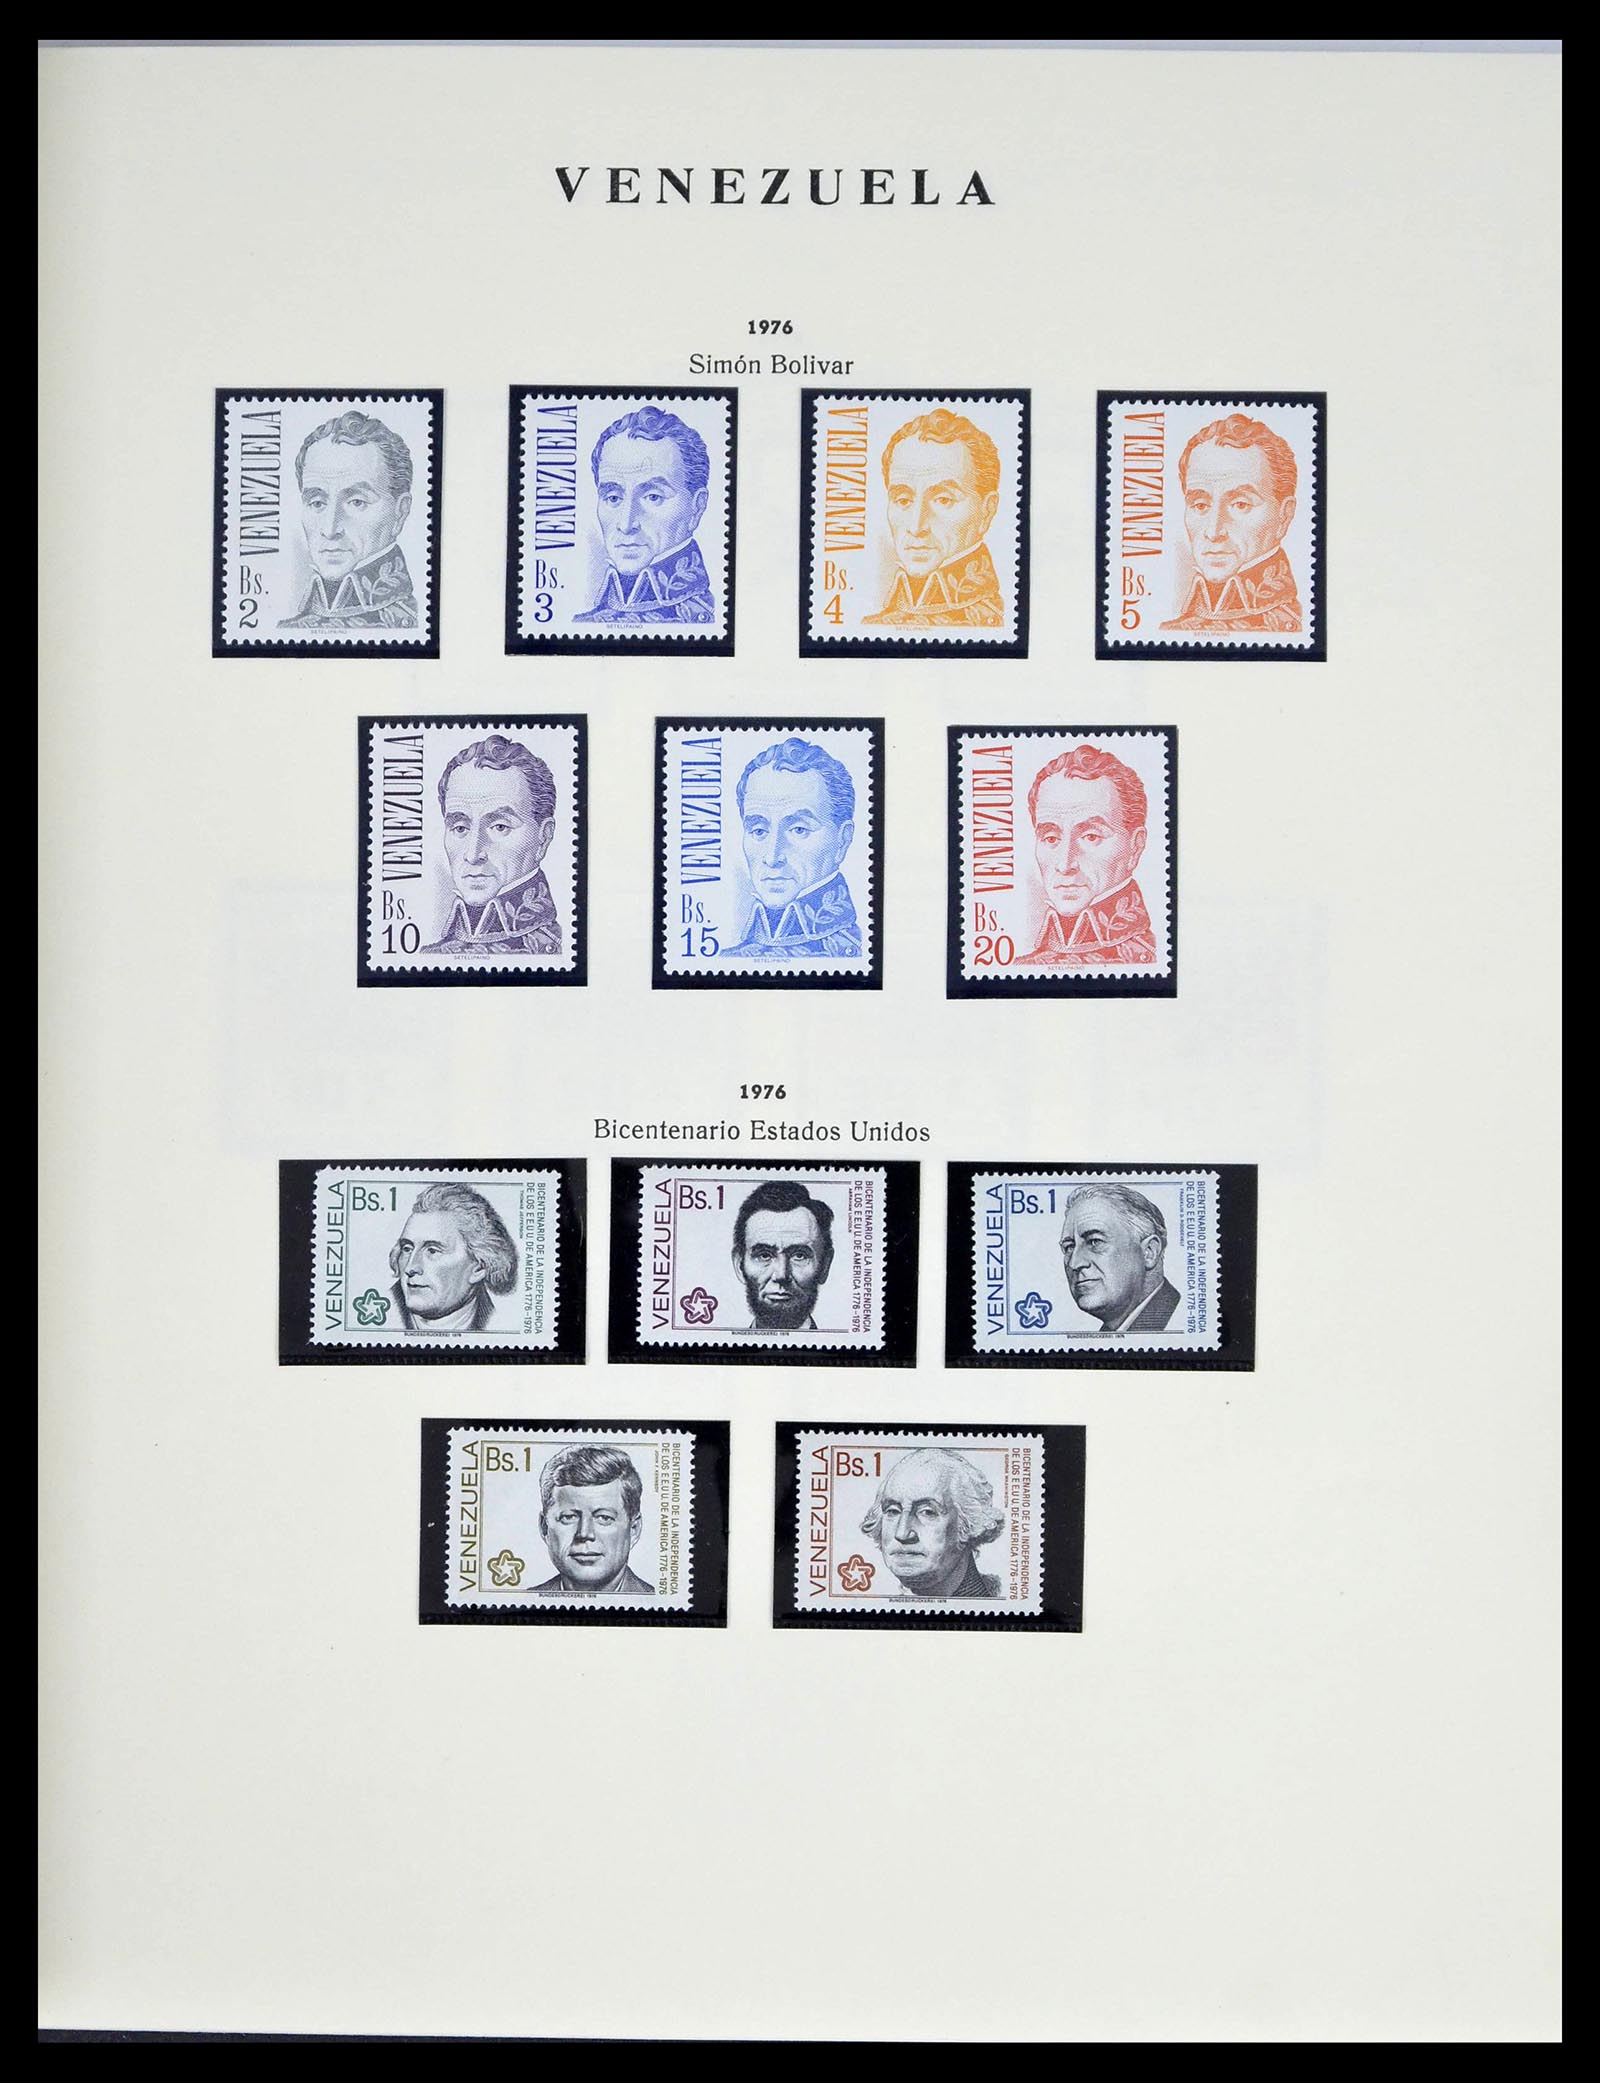 39223 0075 - Stamp collection 39223 Venezuela 1859-1984.